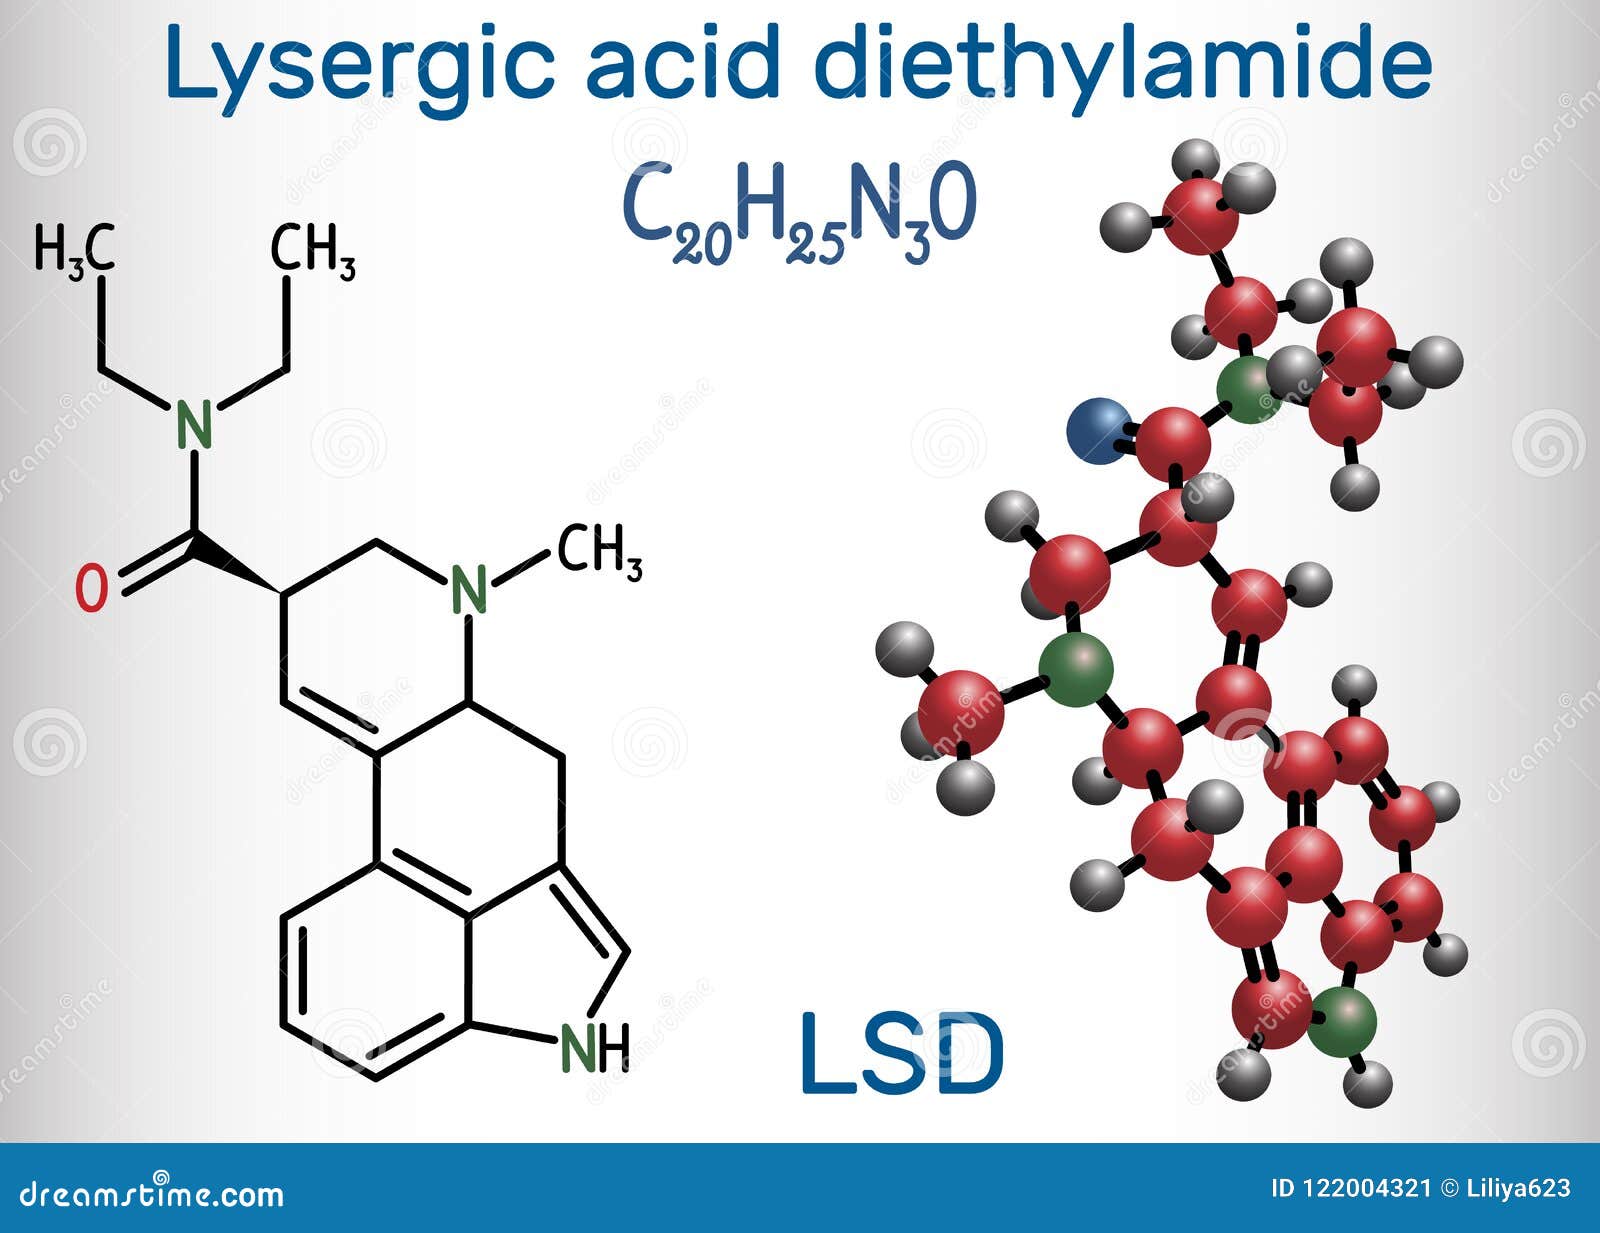 lysergic acid diethylamide lsd. it is a hallucinogenic drug. s